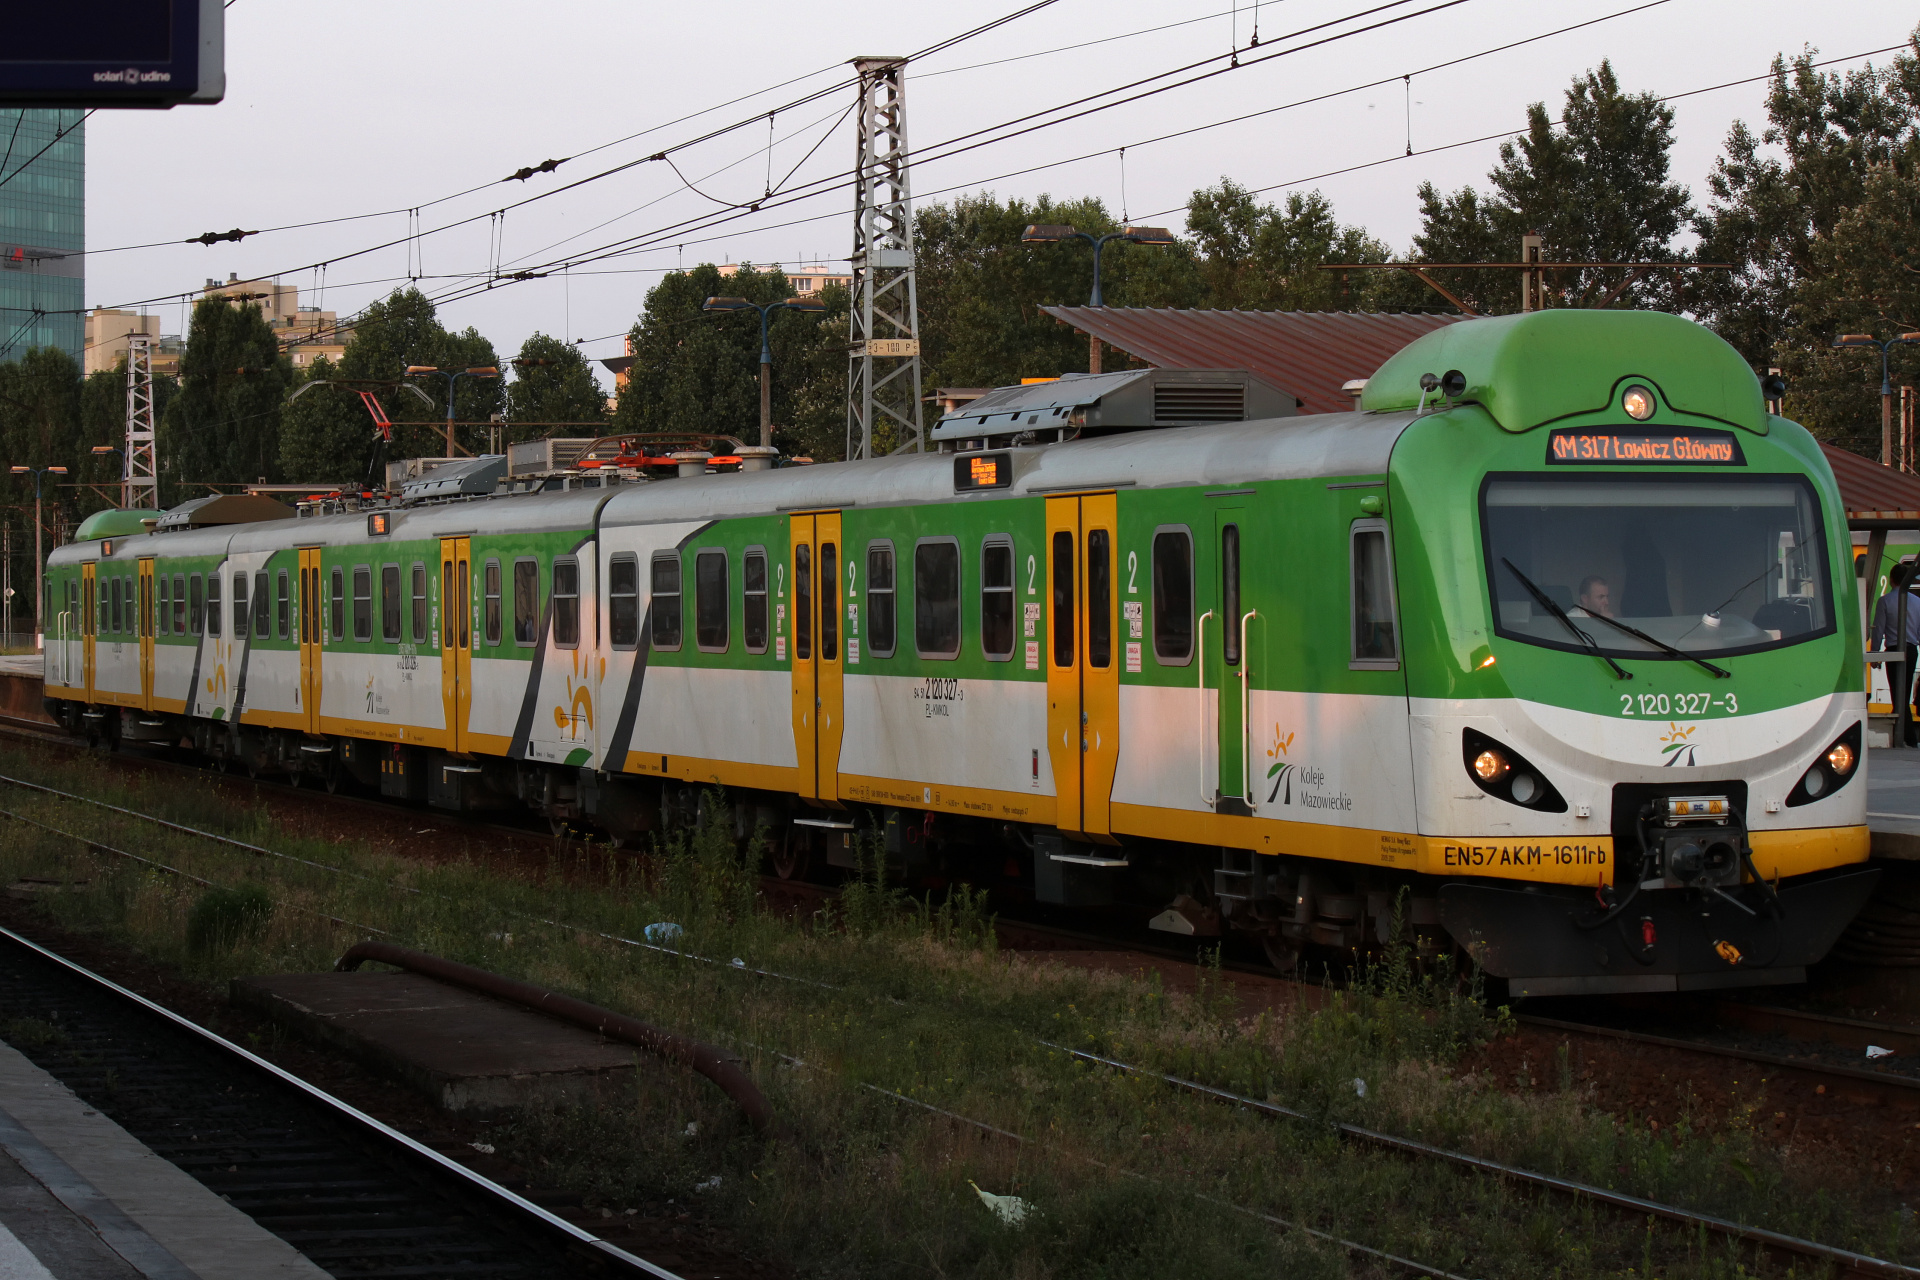 EN57AKM-1611 (Vehicles » Trains and Locomotives » Pafawag 5B/6B EN57 and revisions)